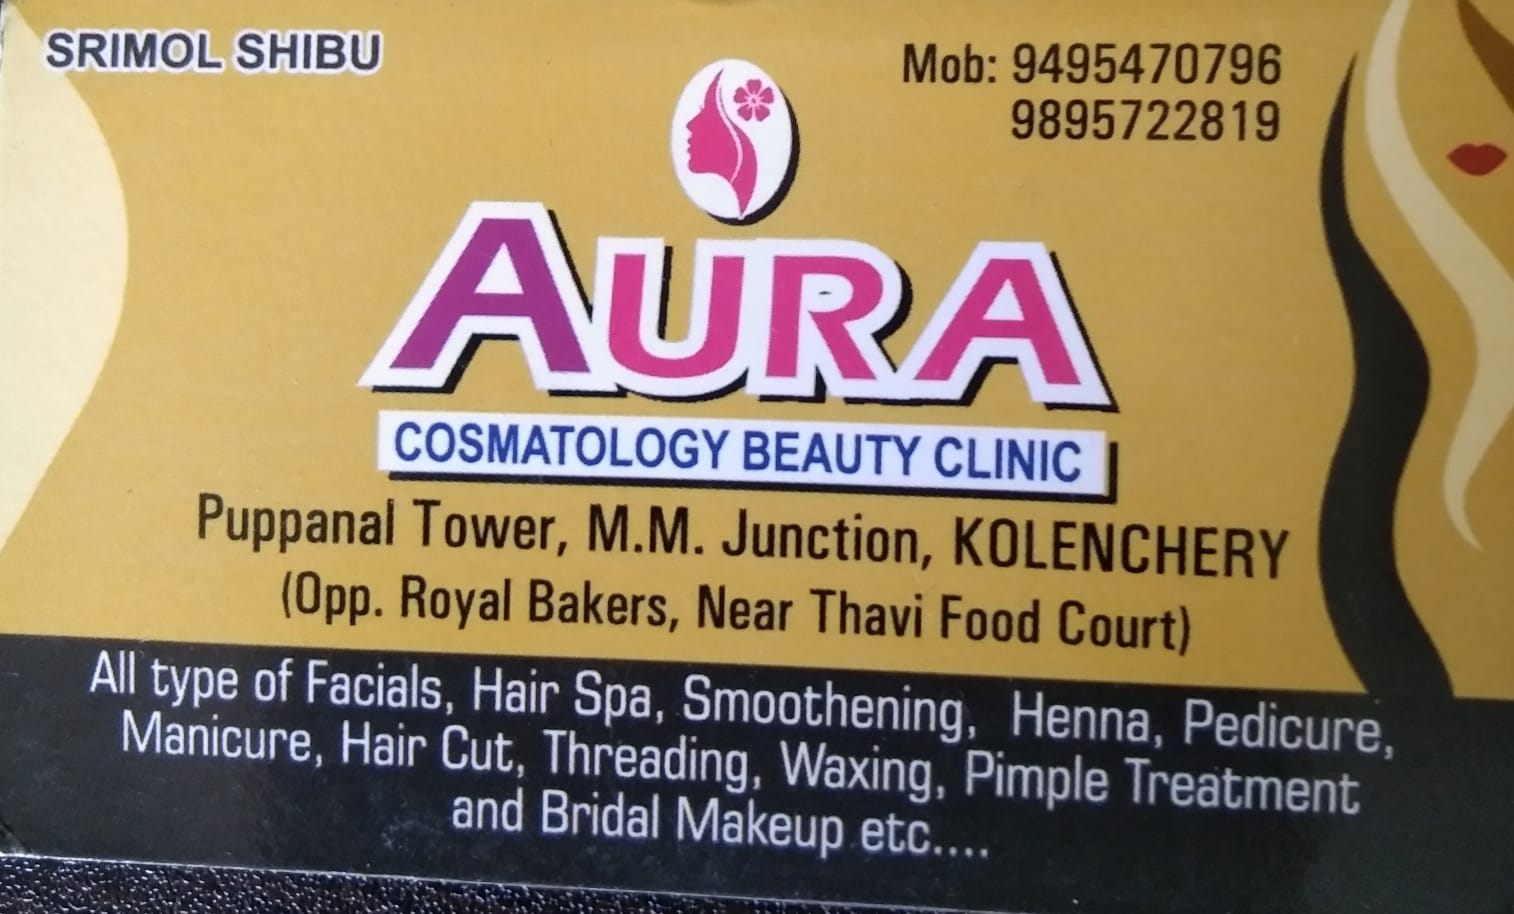 Aura cosmatology beauty cliinic, BEAUTY PARLOUR,  service in Kolenchery, Ernakulam